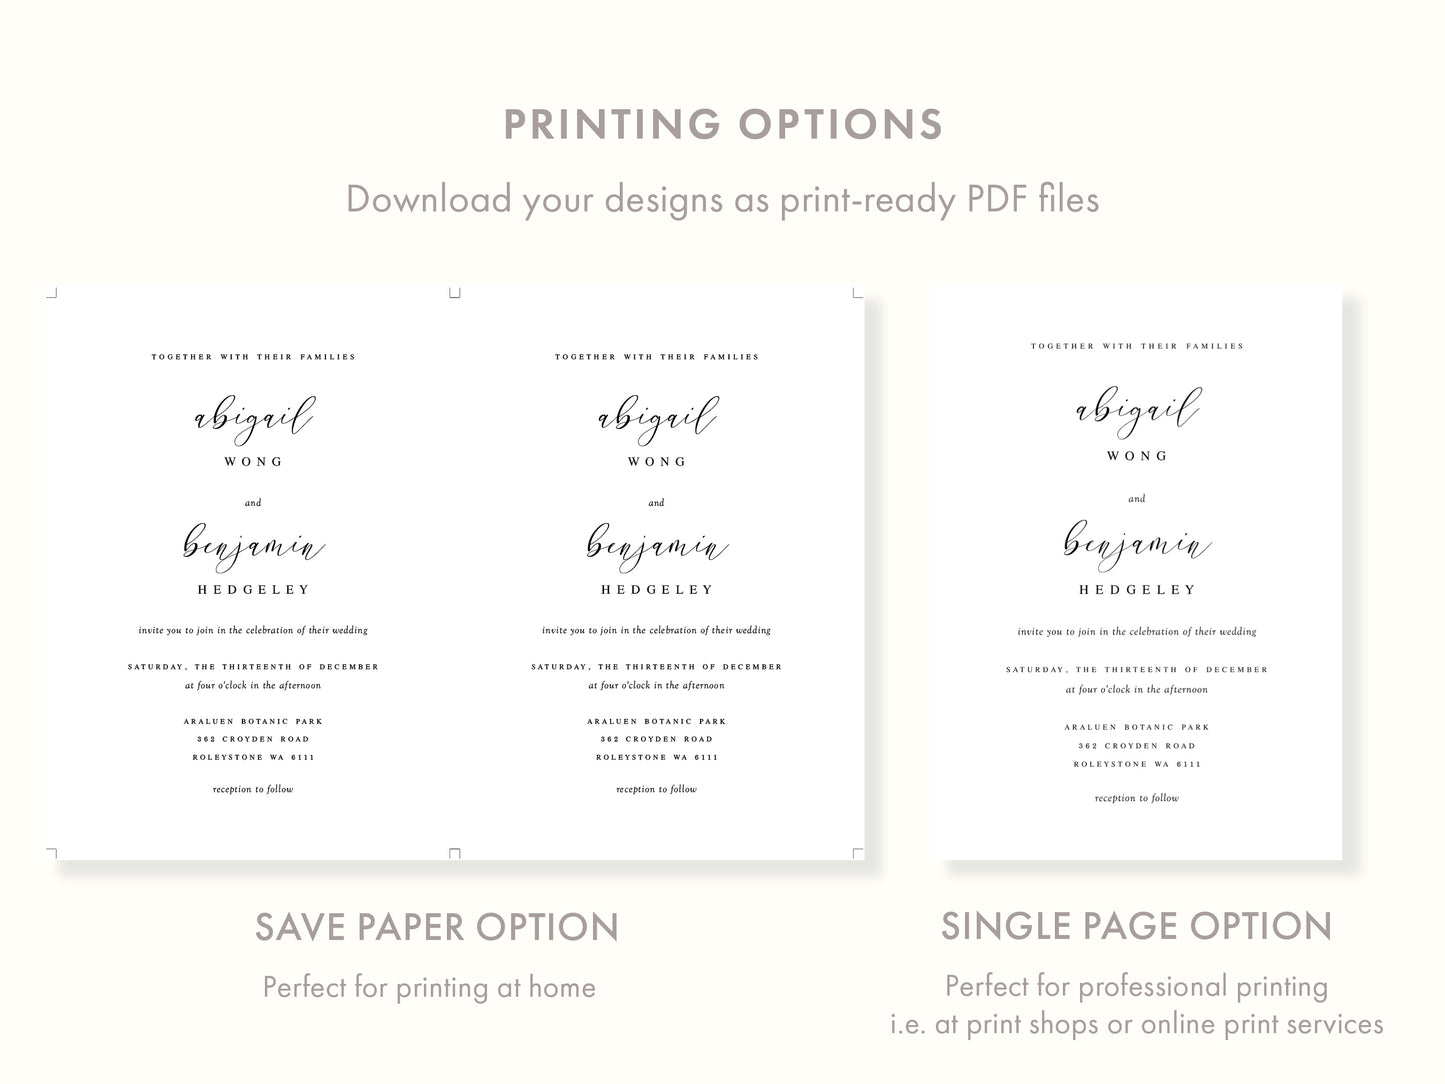 Printable Classic Wedding Invitation Templates | DIY Editable Invites